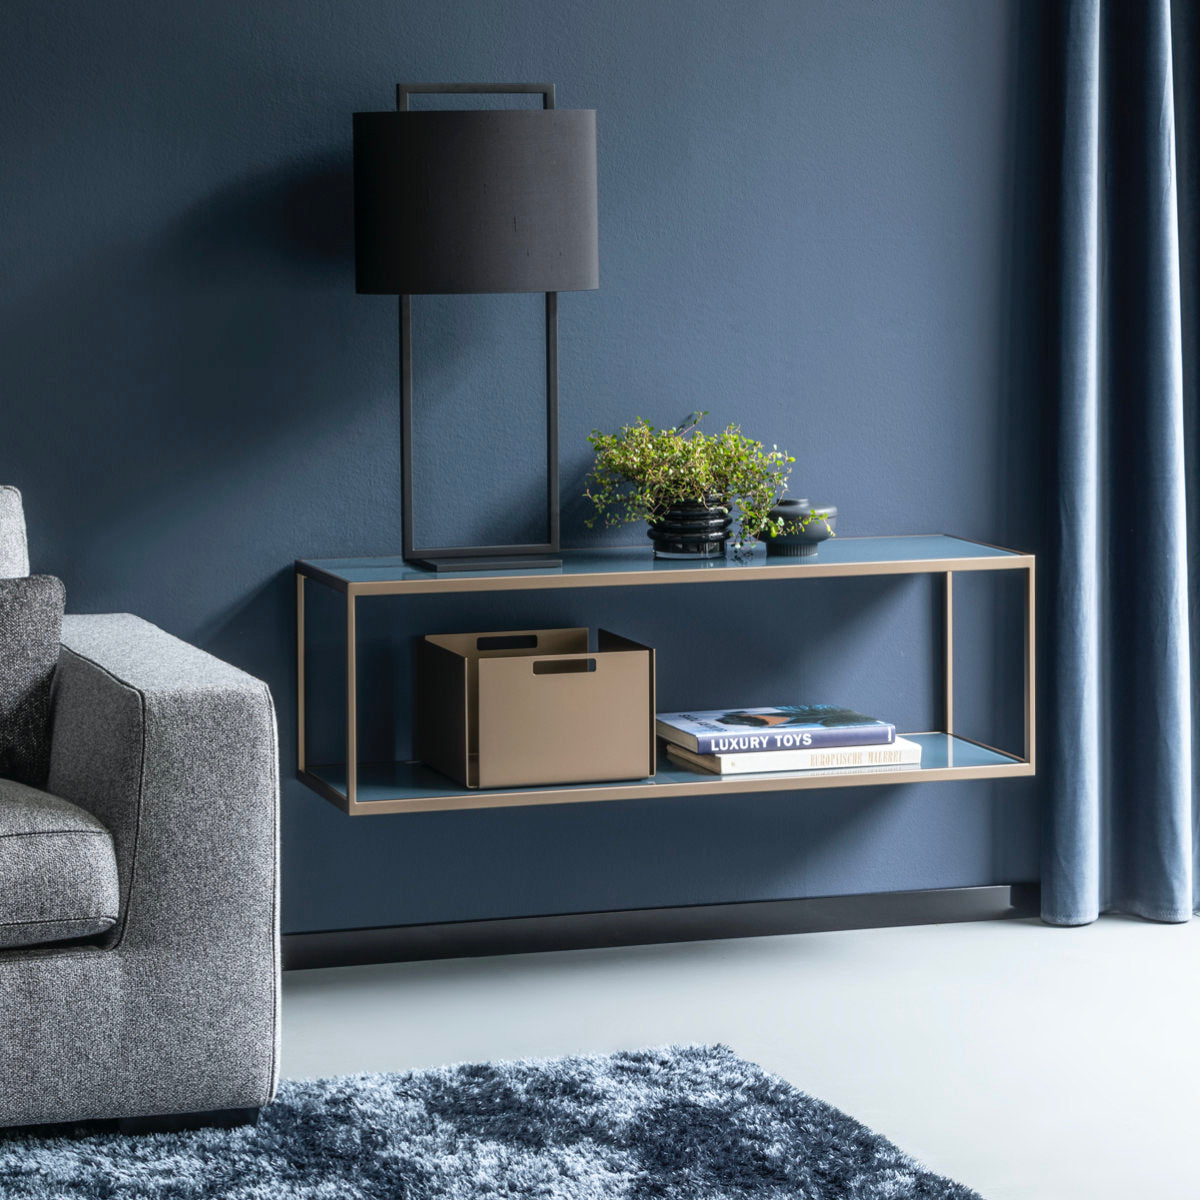 luxury wall shelving unit - living room design